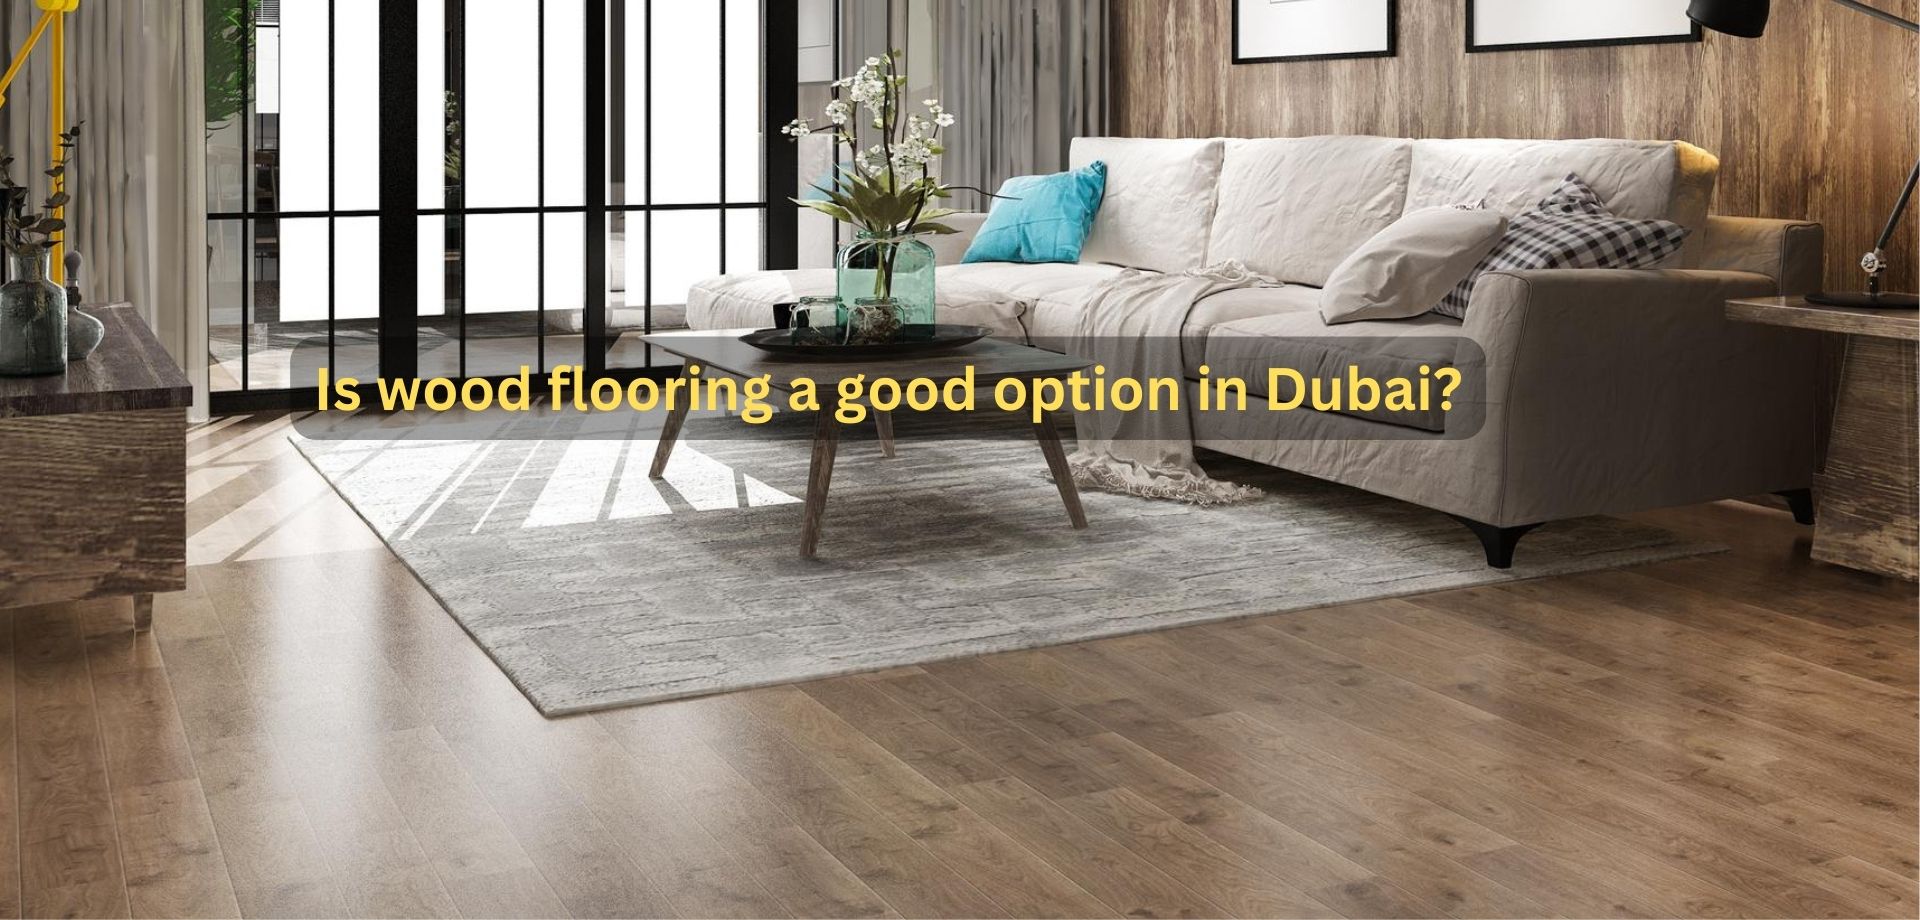 Is wood flooring a good option in Dubai?